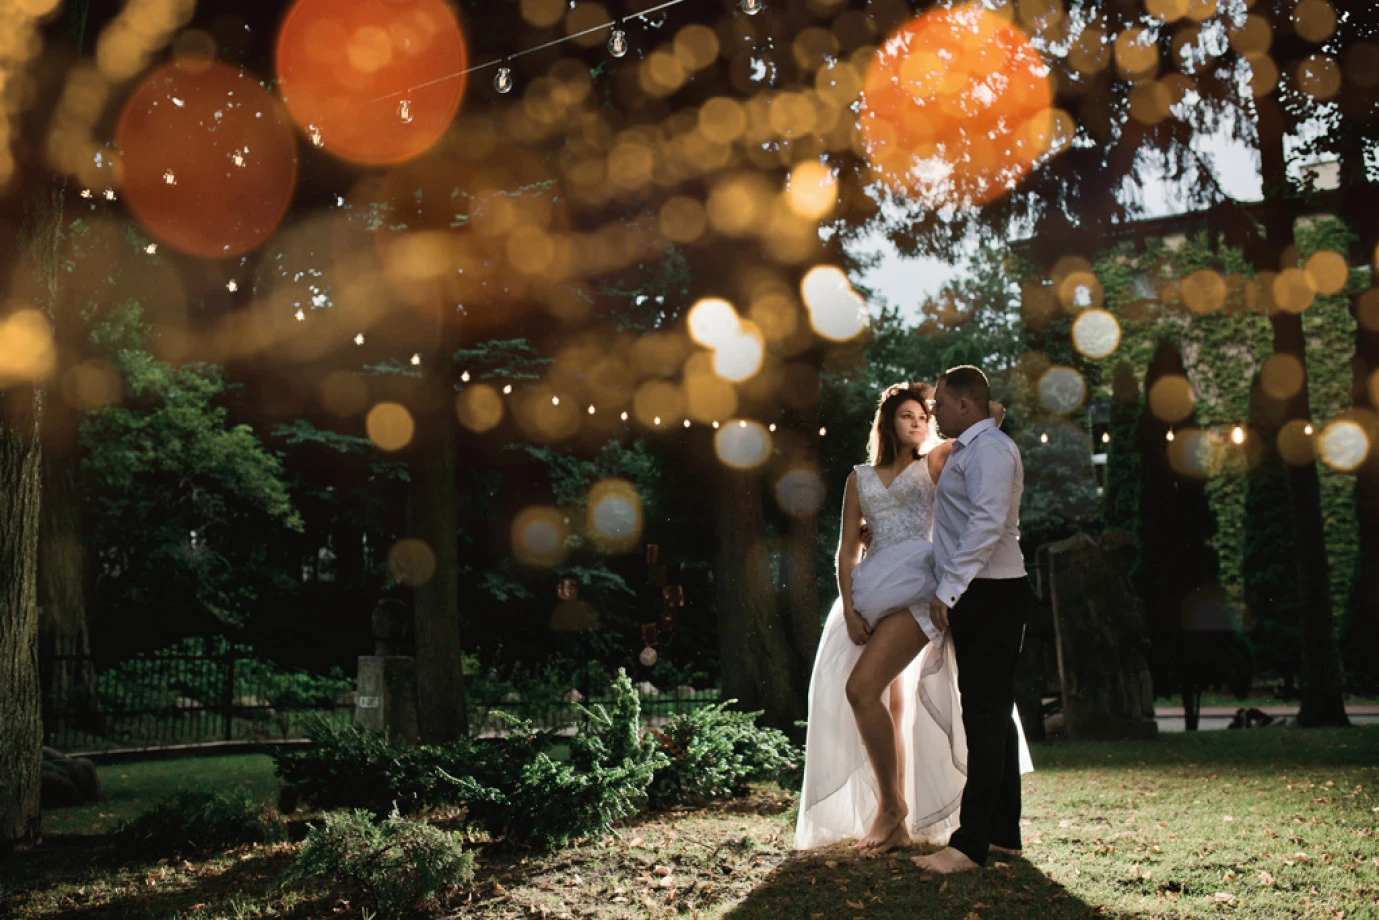 fotograf gdynia szarafinskapl portfolio zdjecia slubne inspiracje wesele plener slubny sesja slubna